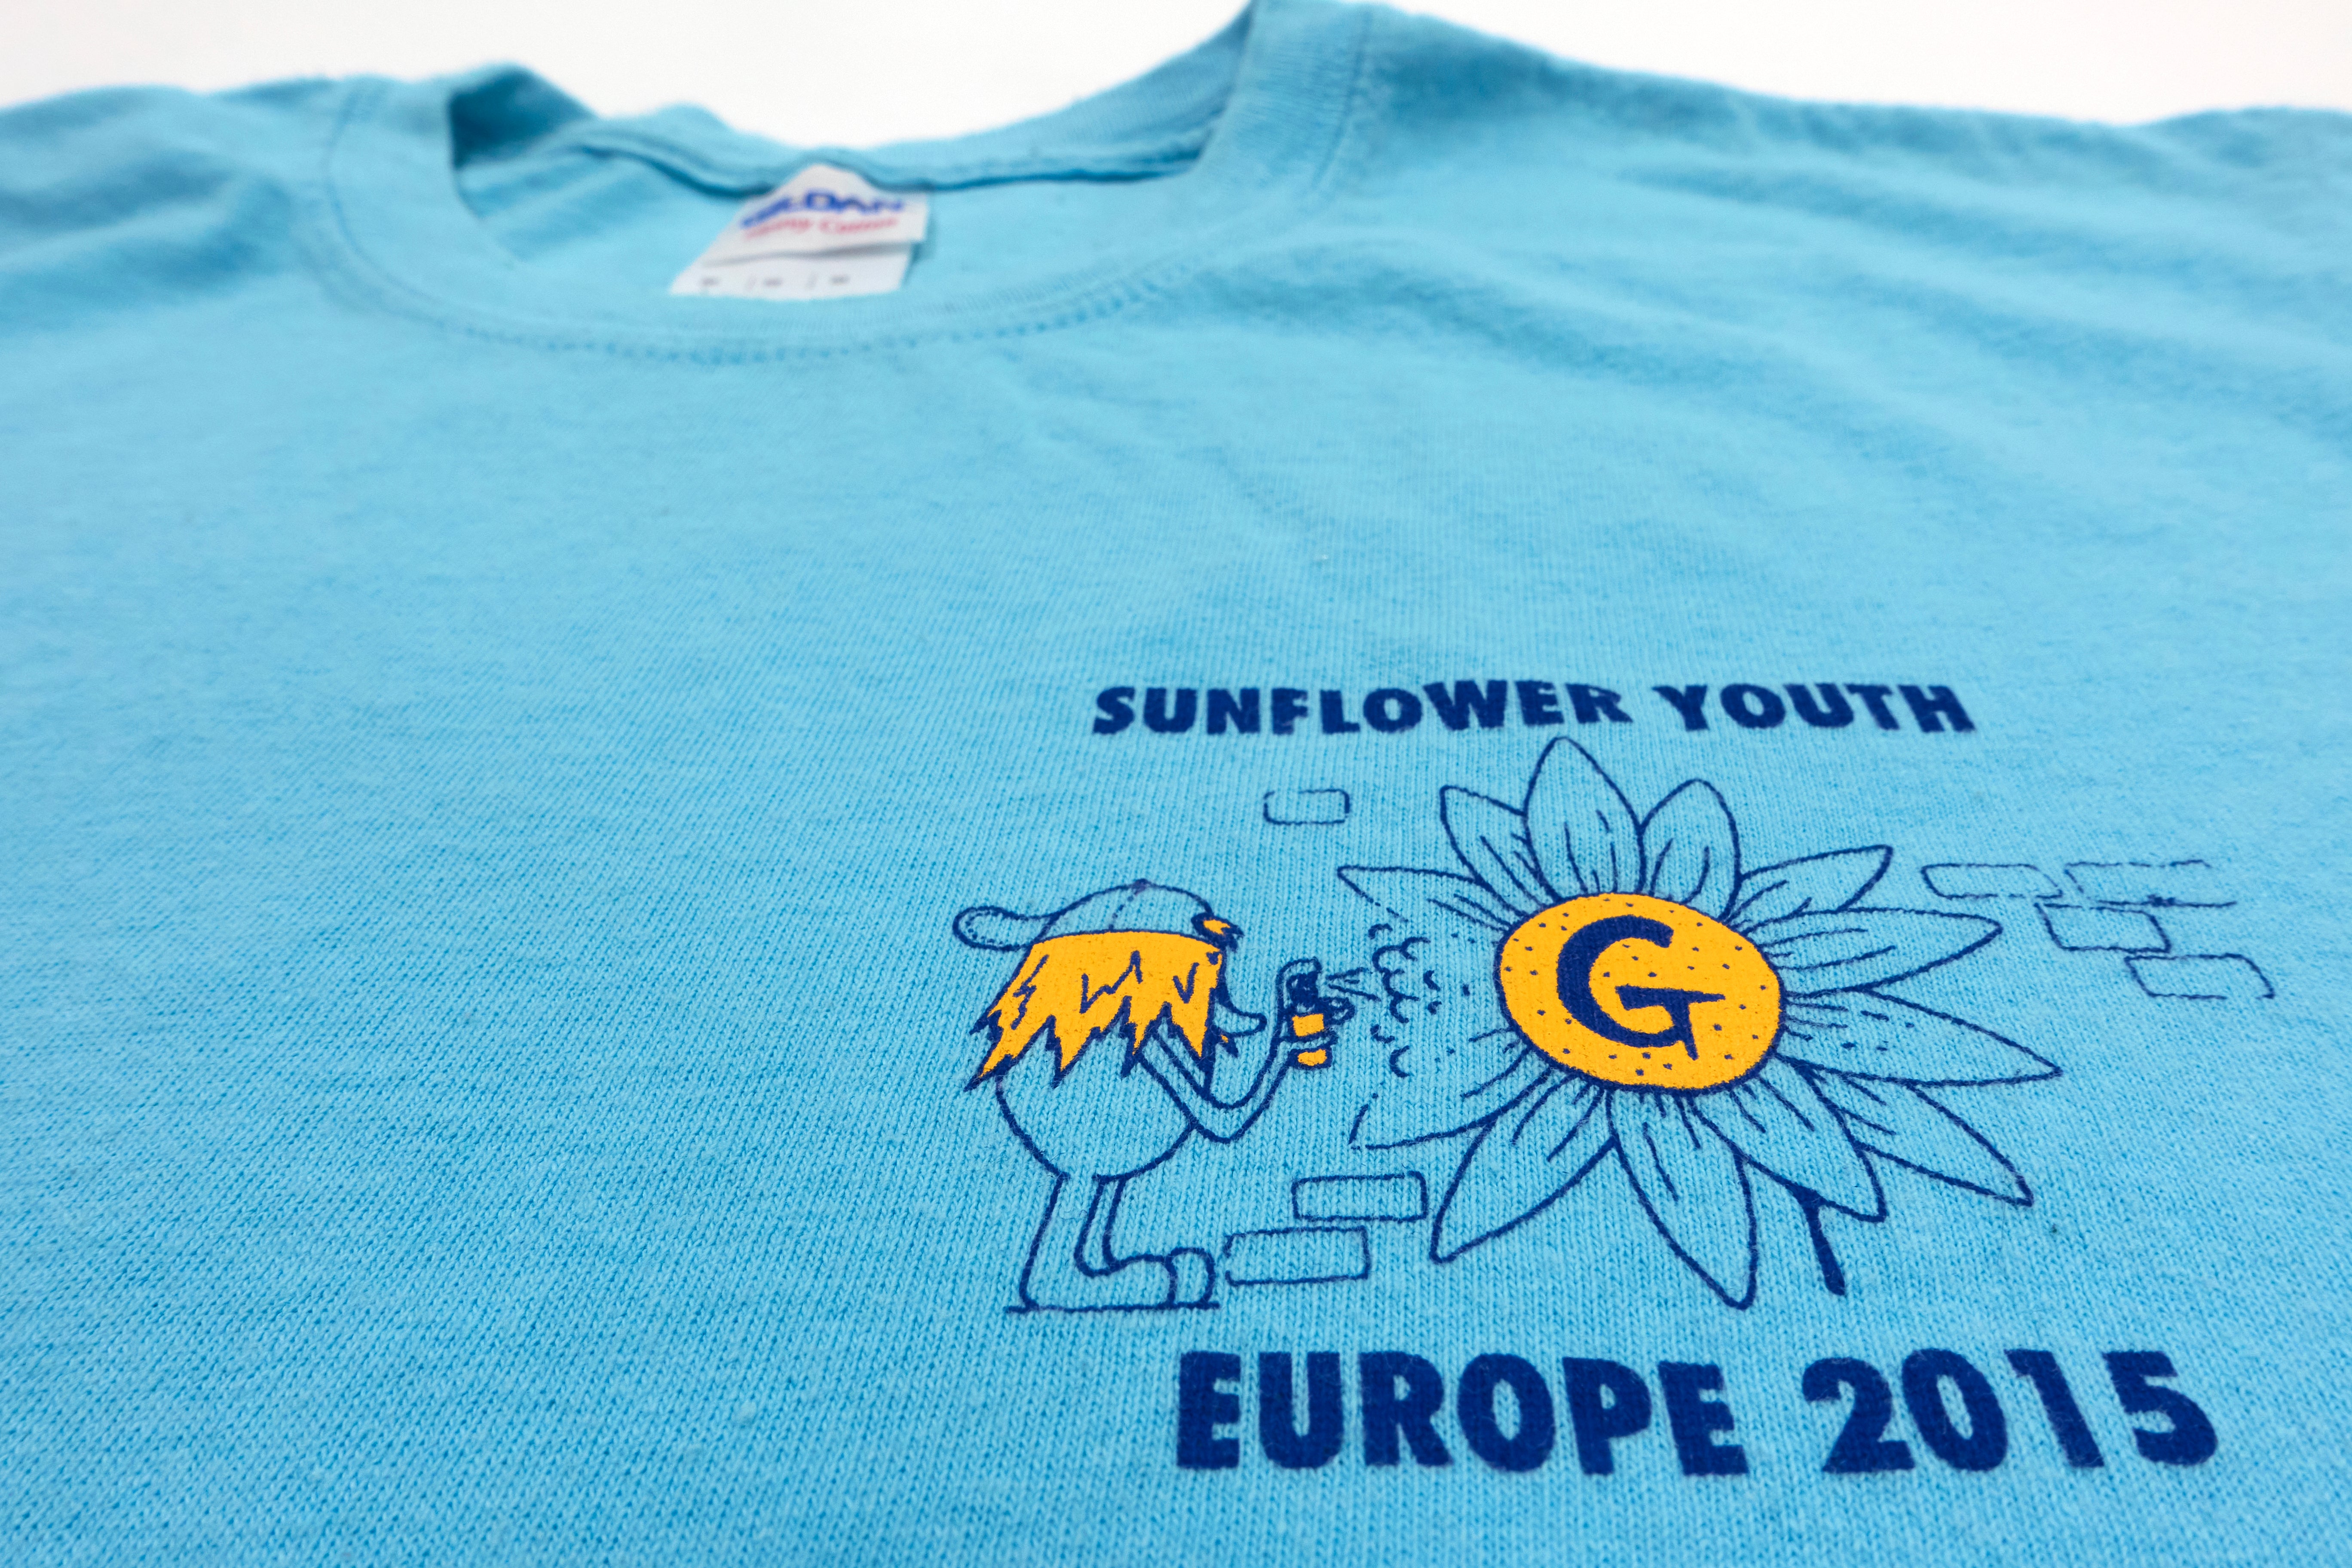 Give – Sunflower Youth Europe 2015 Tour Shirt Size Medium